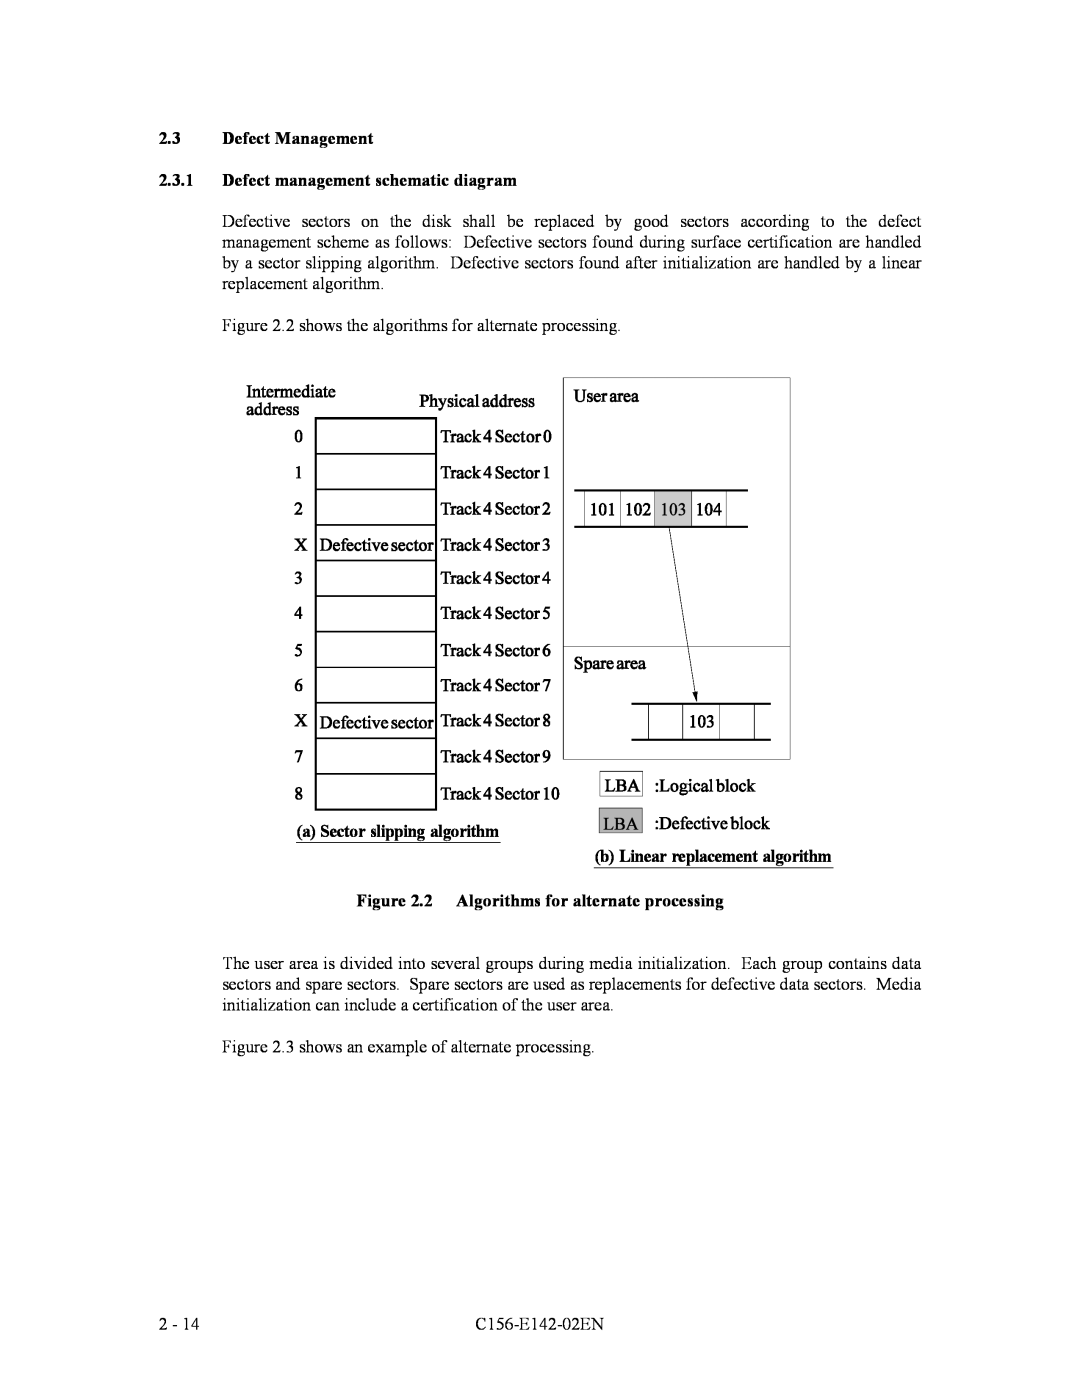 Fujitsu MCF3064AP manual Defect Management 2.3.1 Defect management schematic diagram, 2 Algorithms for alternate processing 